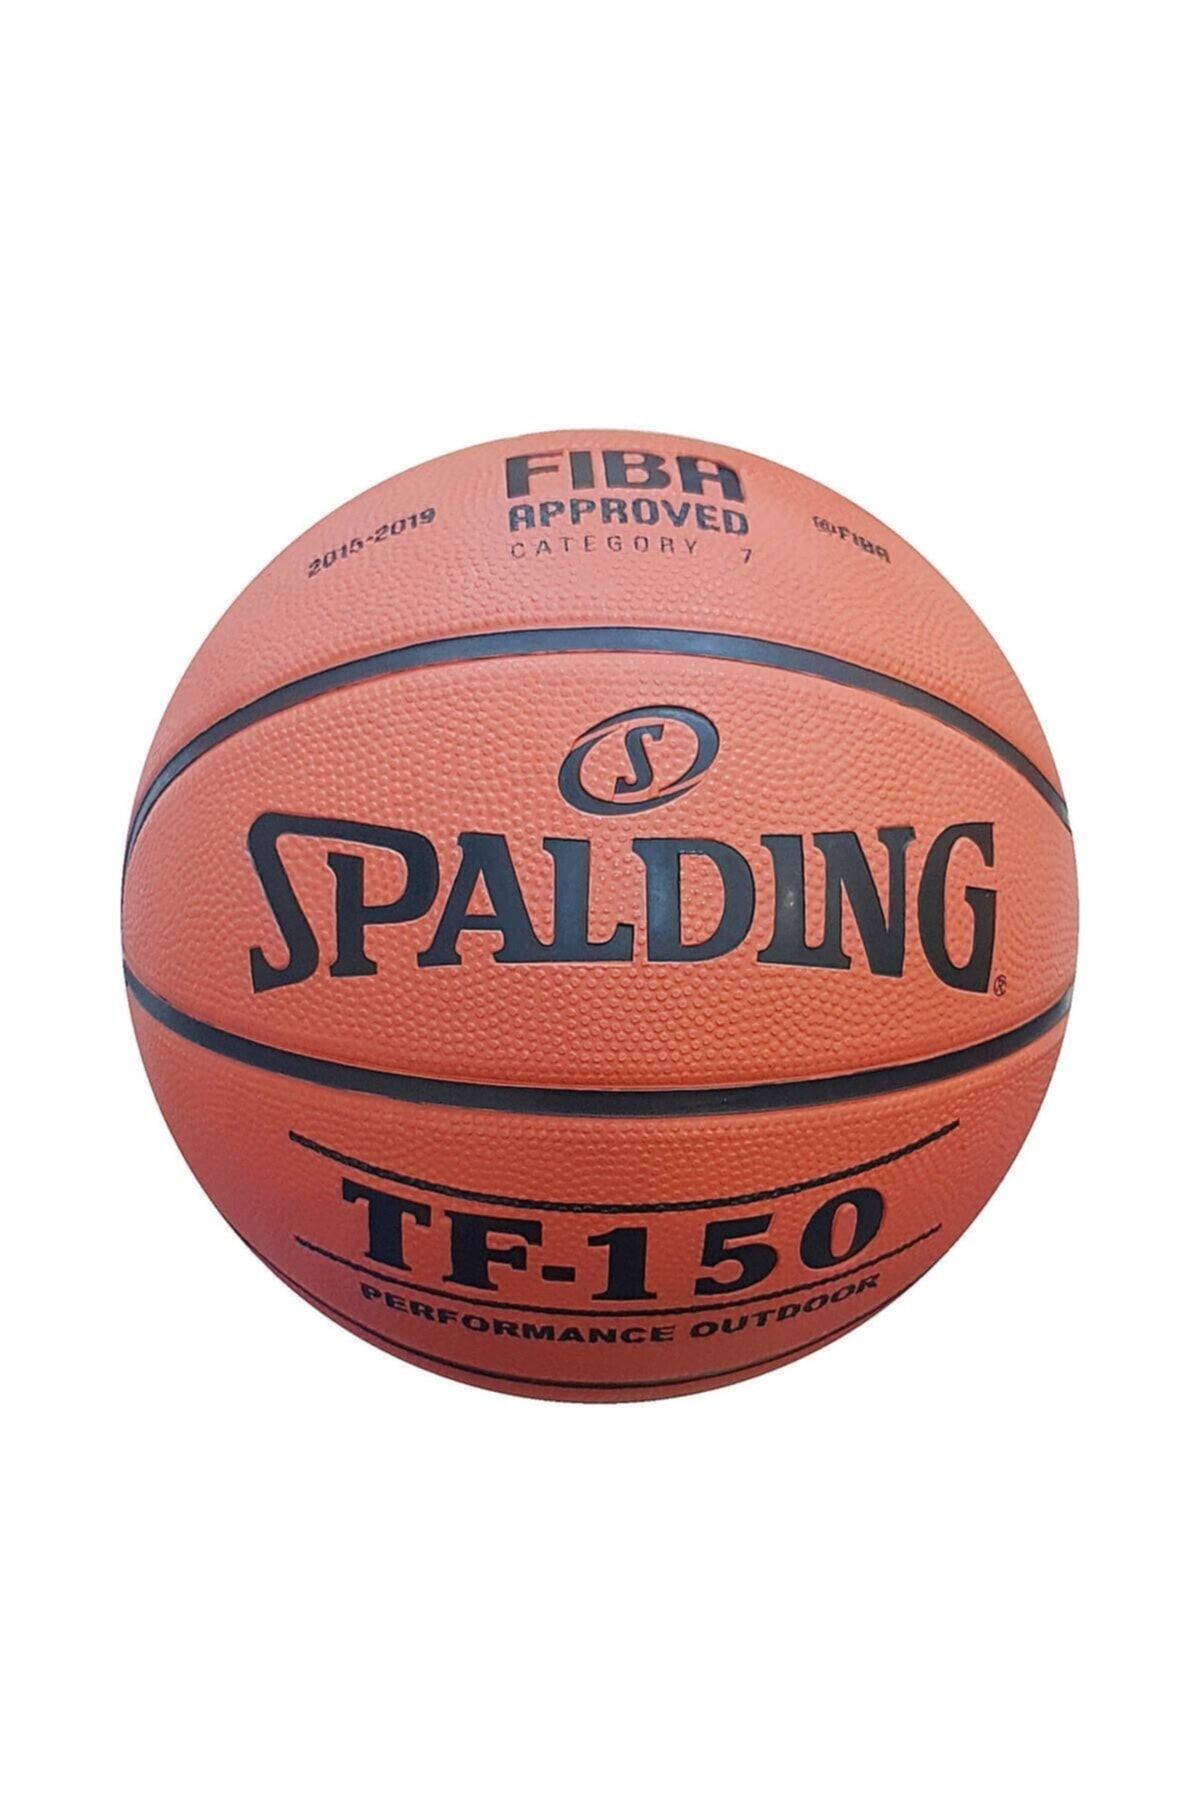 Avessa Spalding Tf-150 Basketbol Topu Size 6 Fiba Logolu